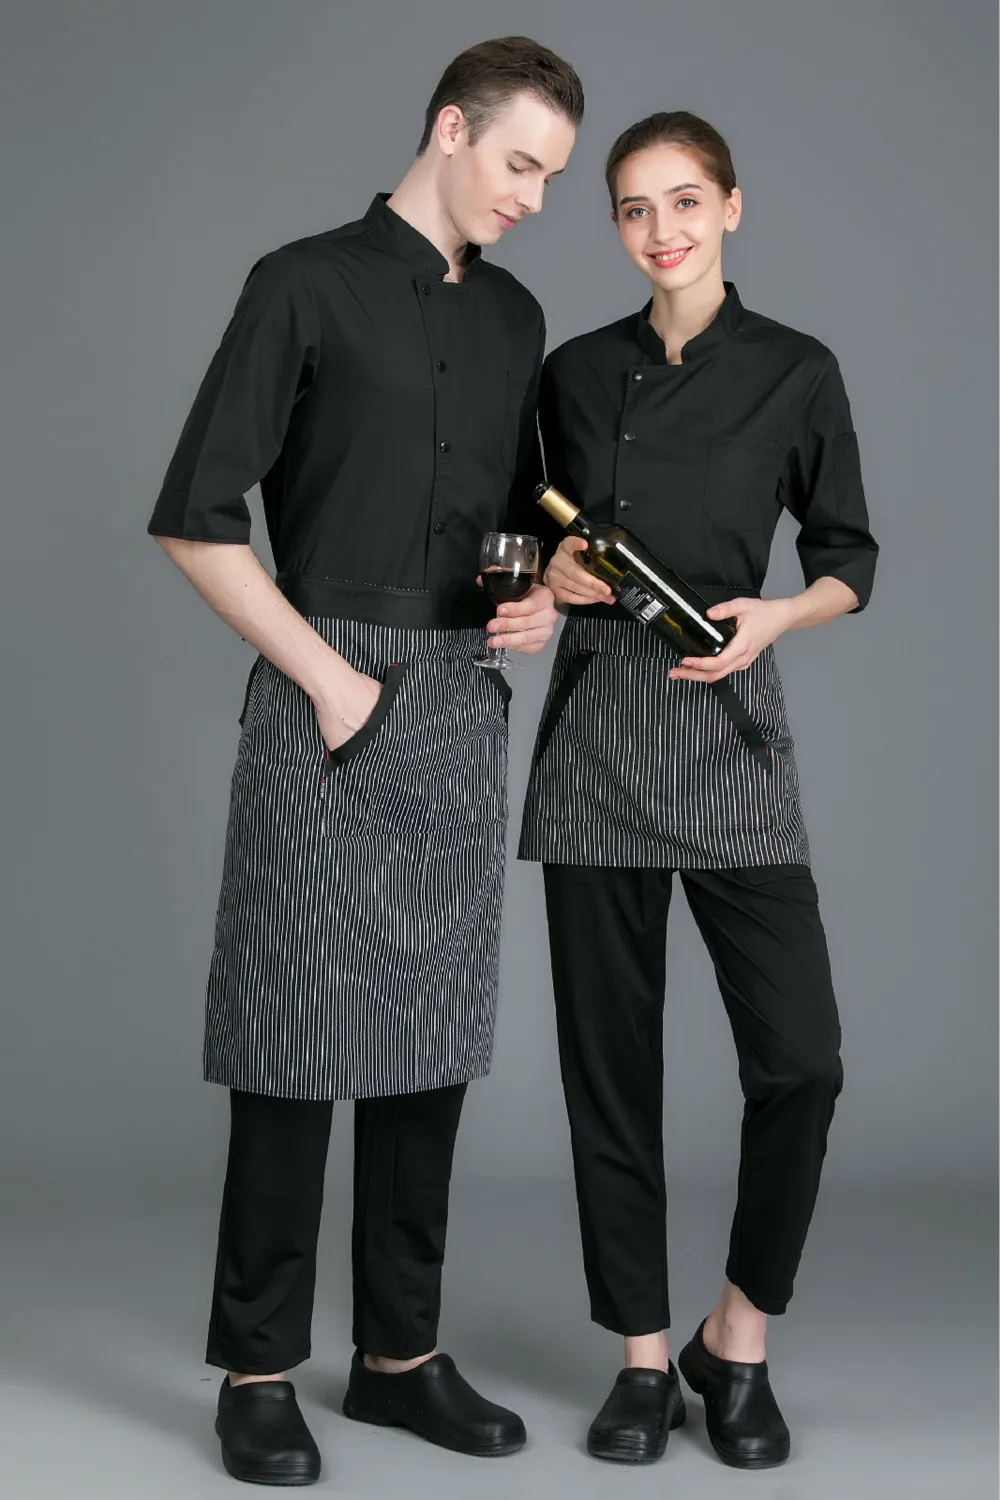 

Chef Jacket Seven-quarter Sleeve Cook Waiter Uniform Summer Kitchen Restaurant Catering Hotel Cafe Work Shirt